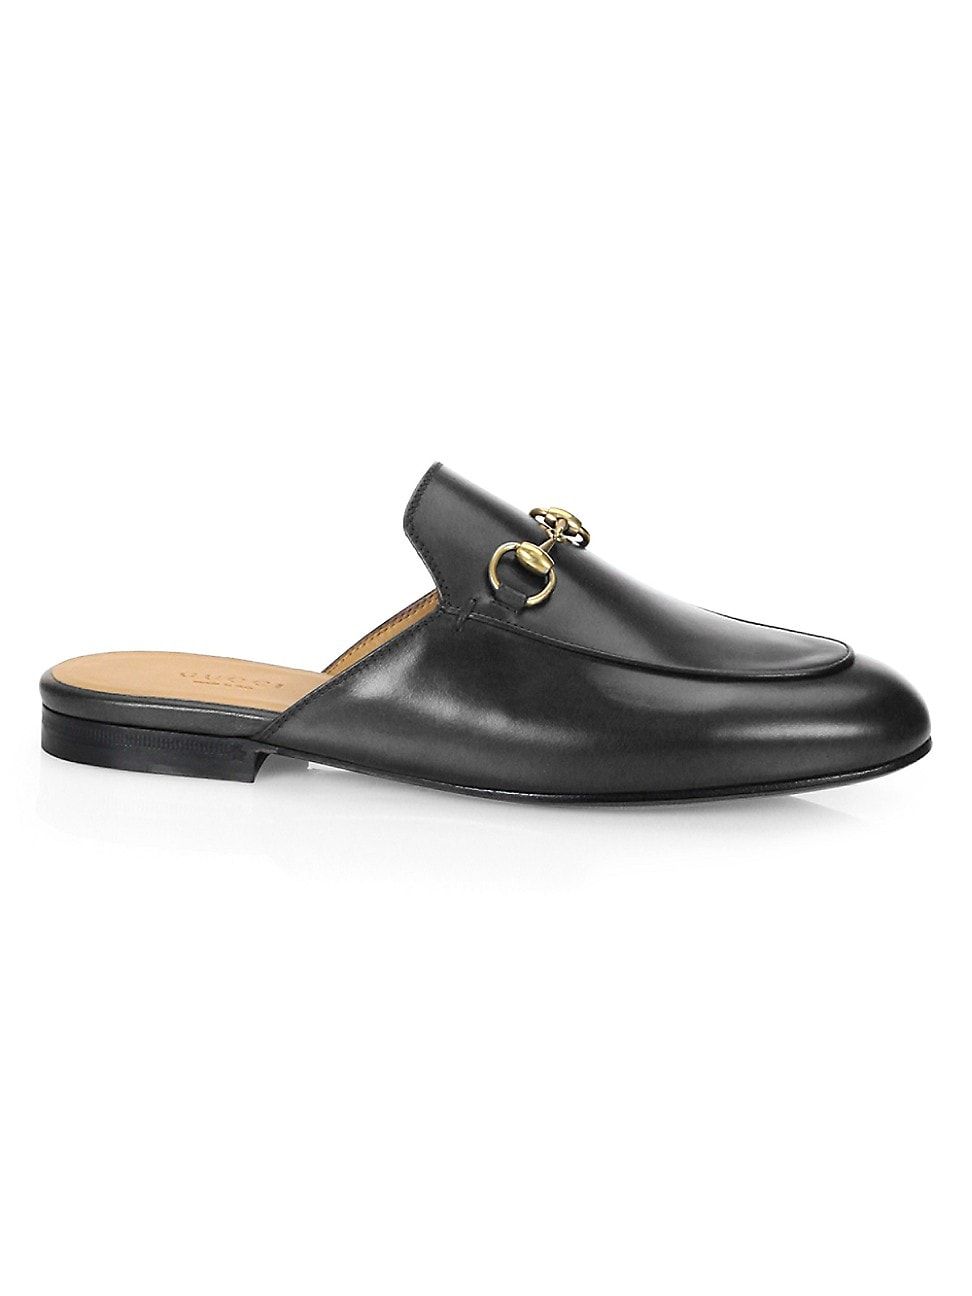 Women's Princetown Leather Slipper - Black - Size 5.5 - Black - Size 5.5 | Saks Fifth Avenue